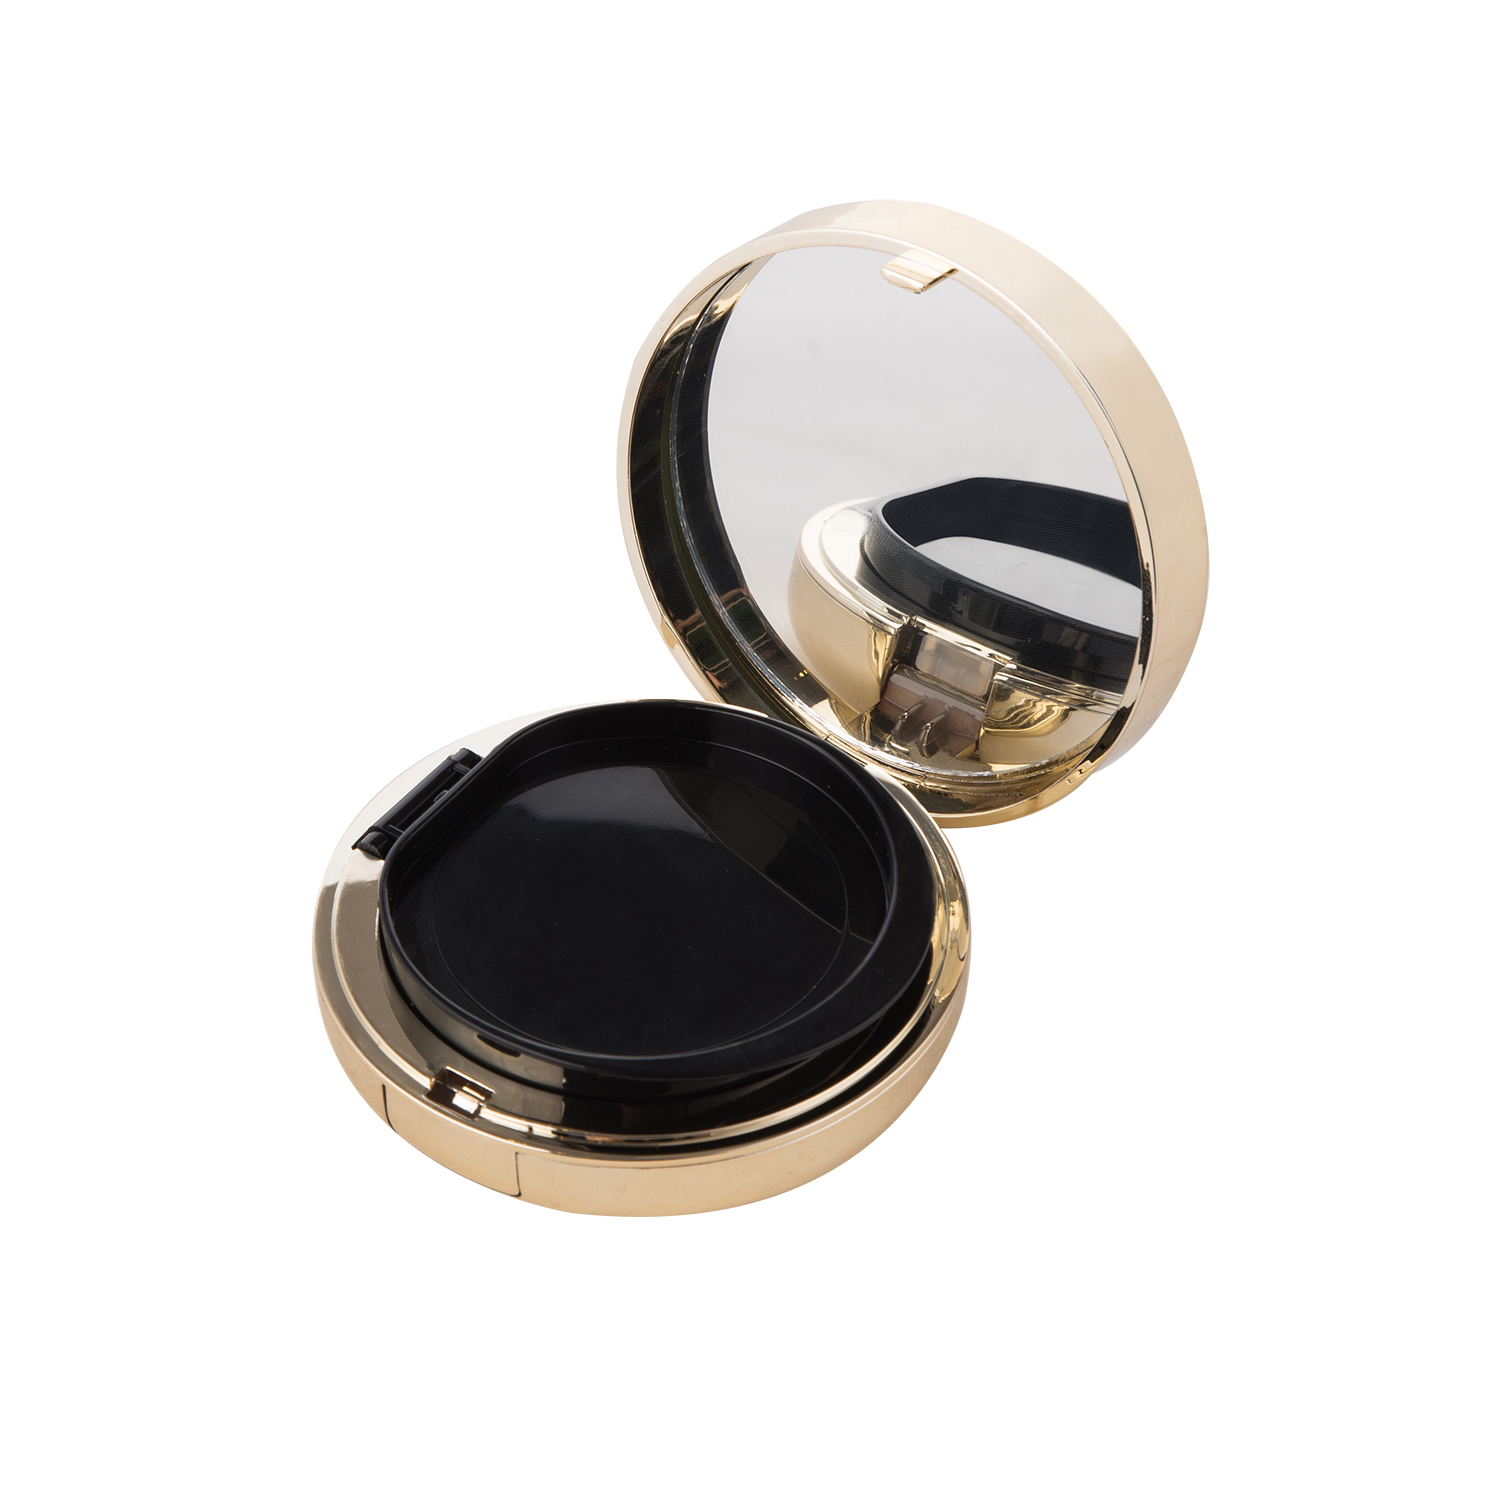 15g Luxury Gem Powder Compact Case with Mirror Empty Makeup Case